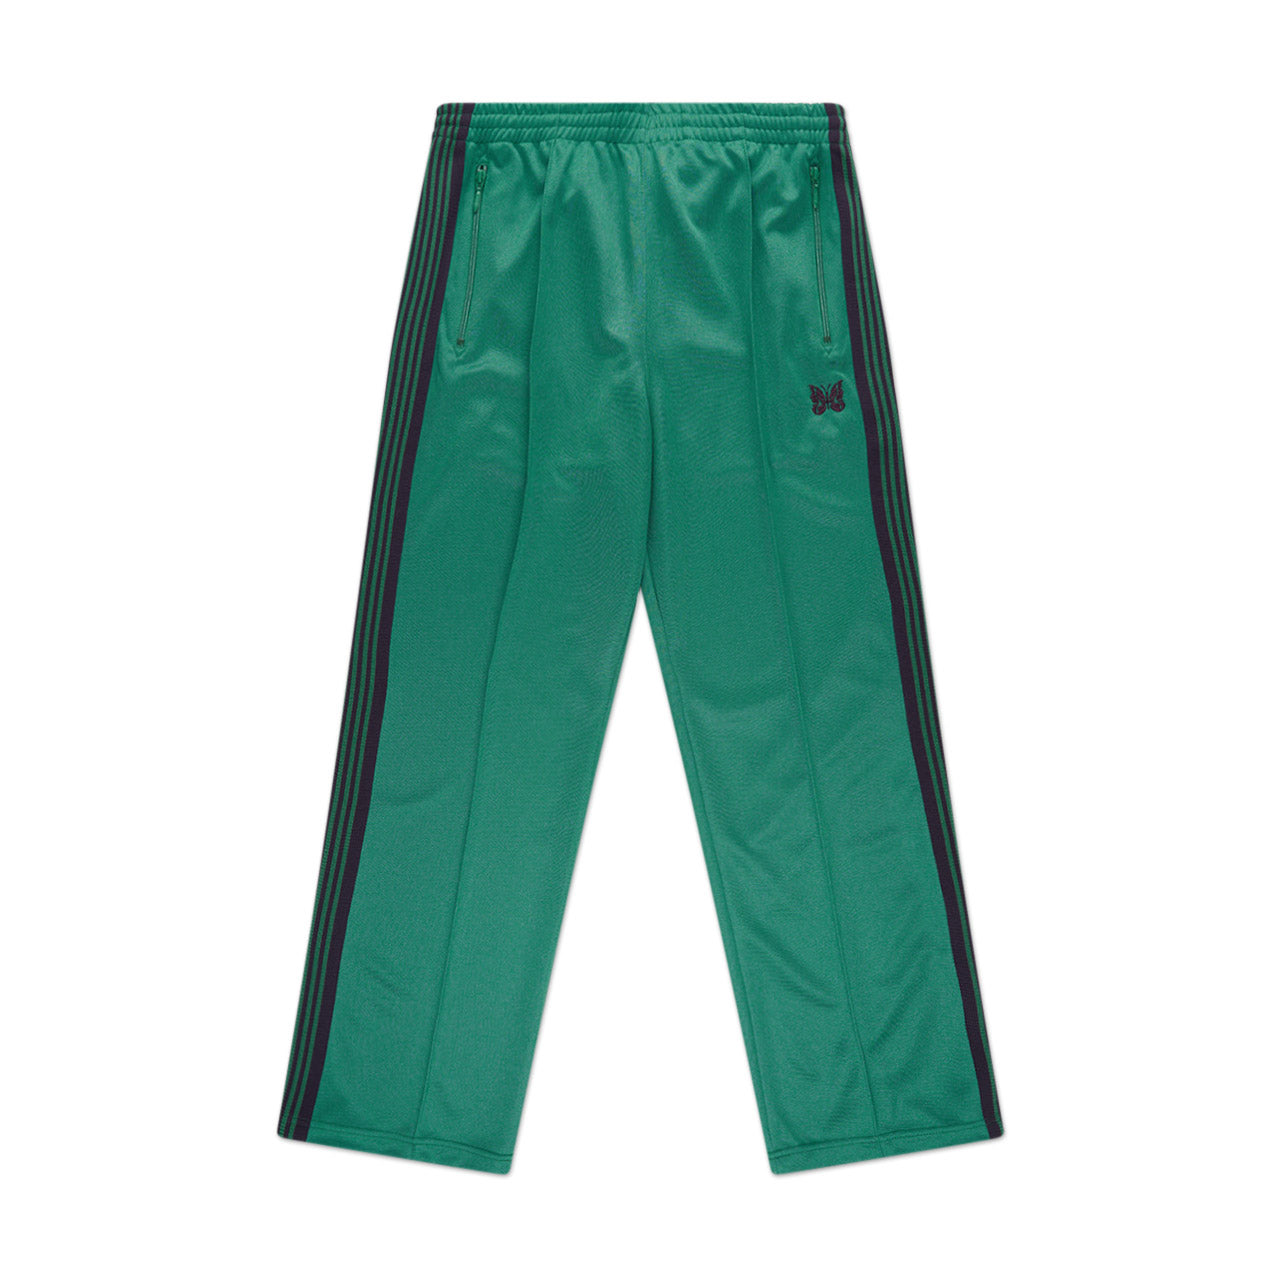 needles side stripe track pants (emerald)